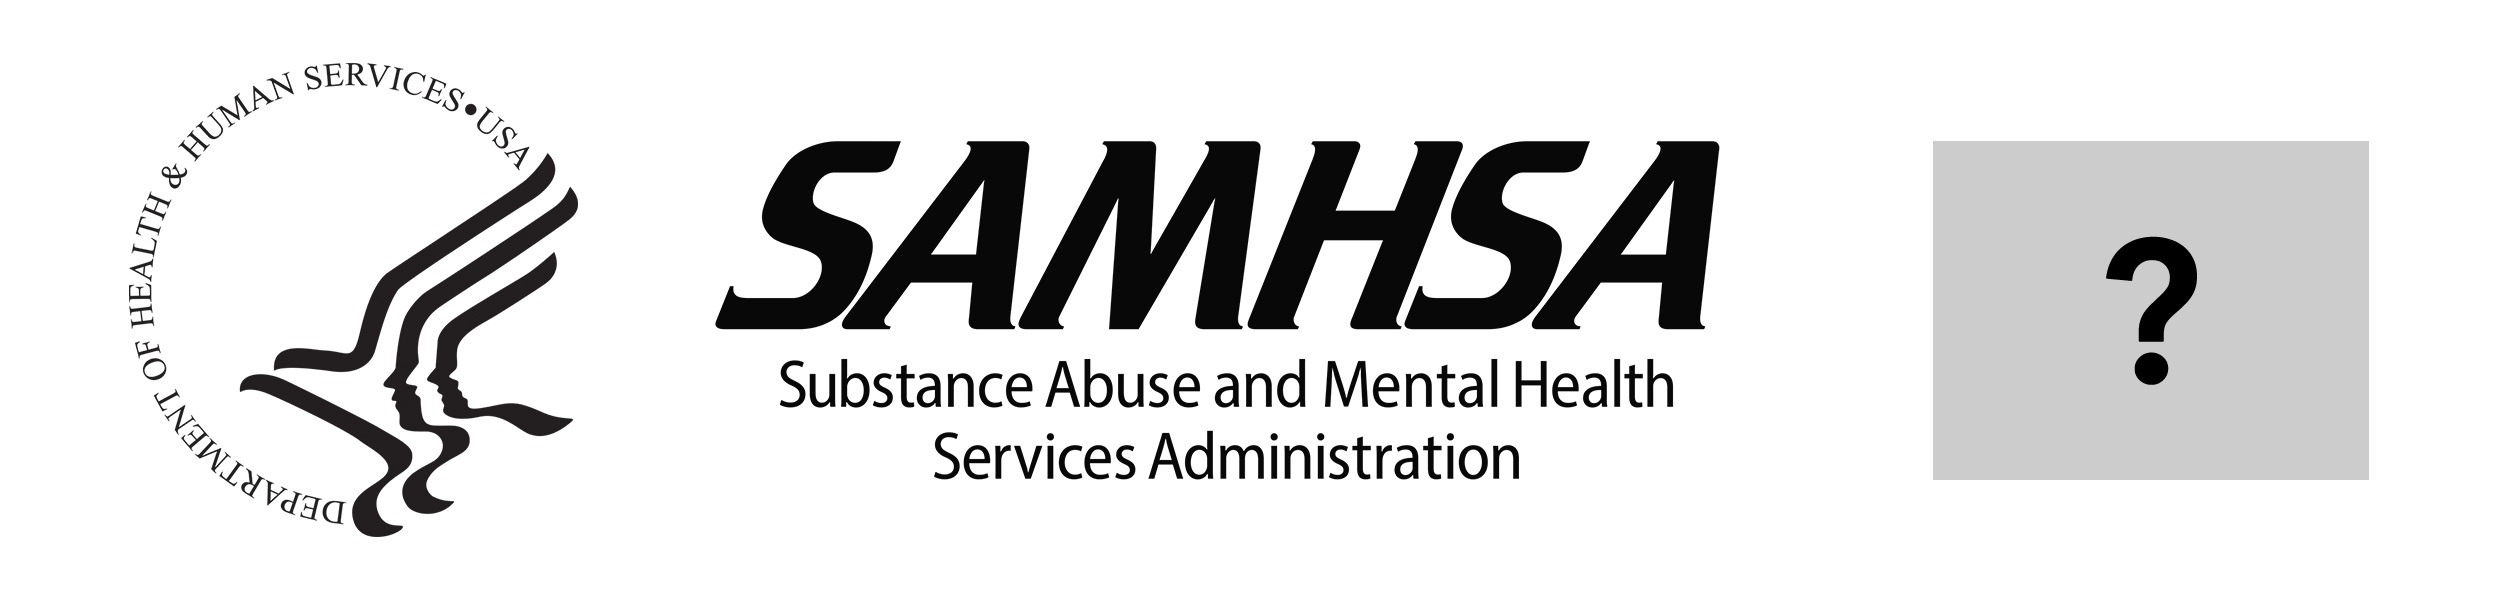 Hun Logo - Logo Use Guidelines. SAMHSA Abuse and Mental Health